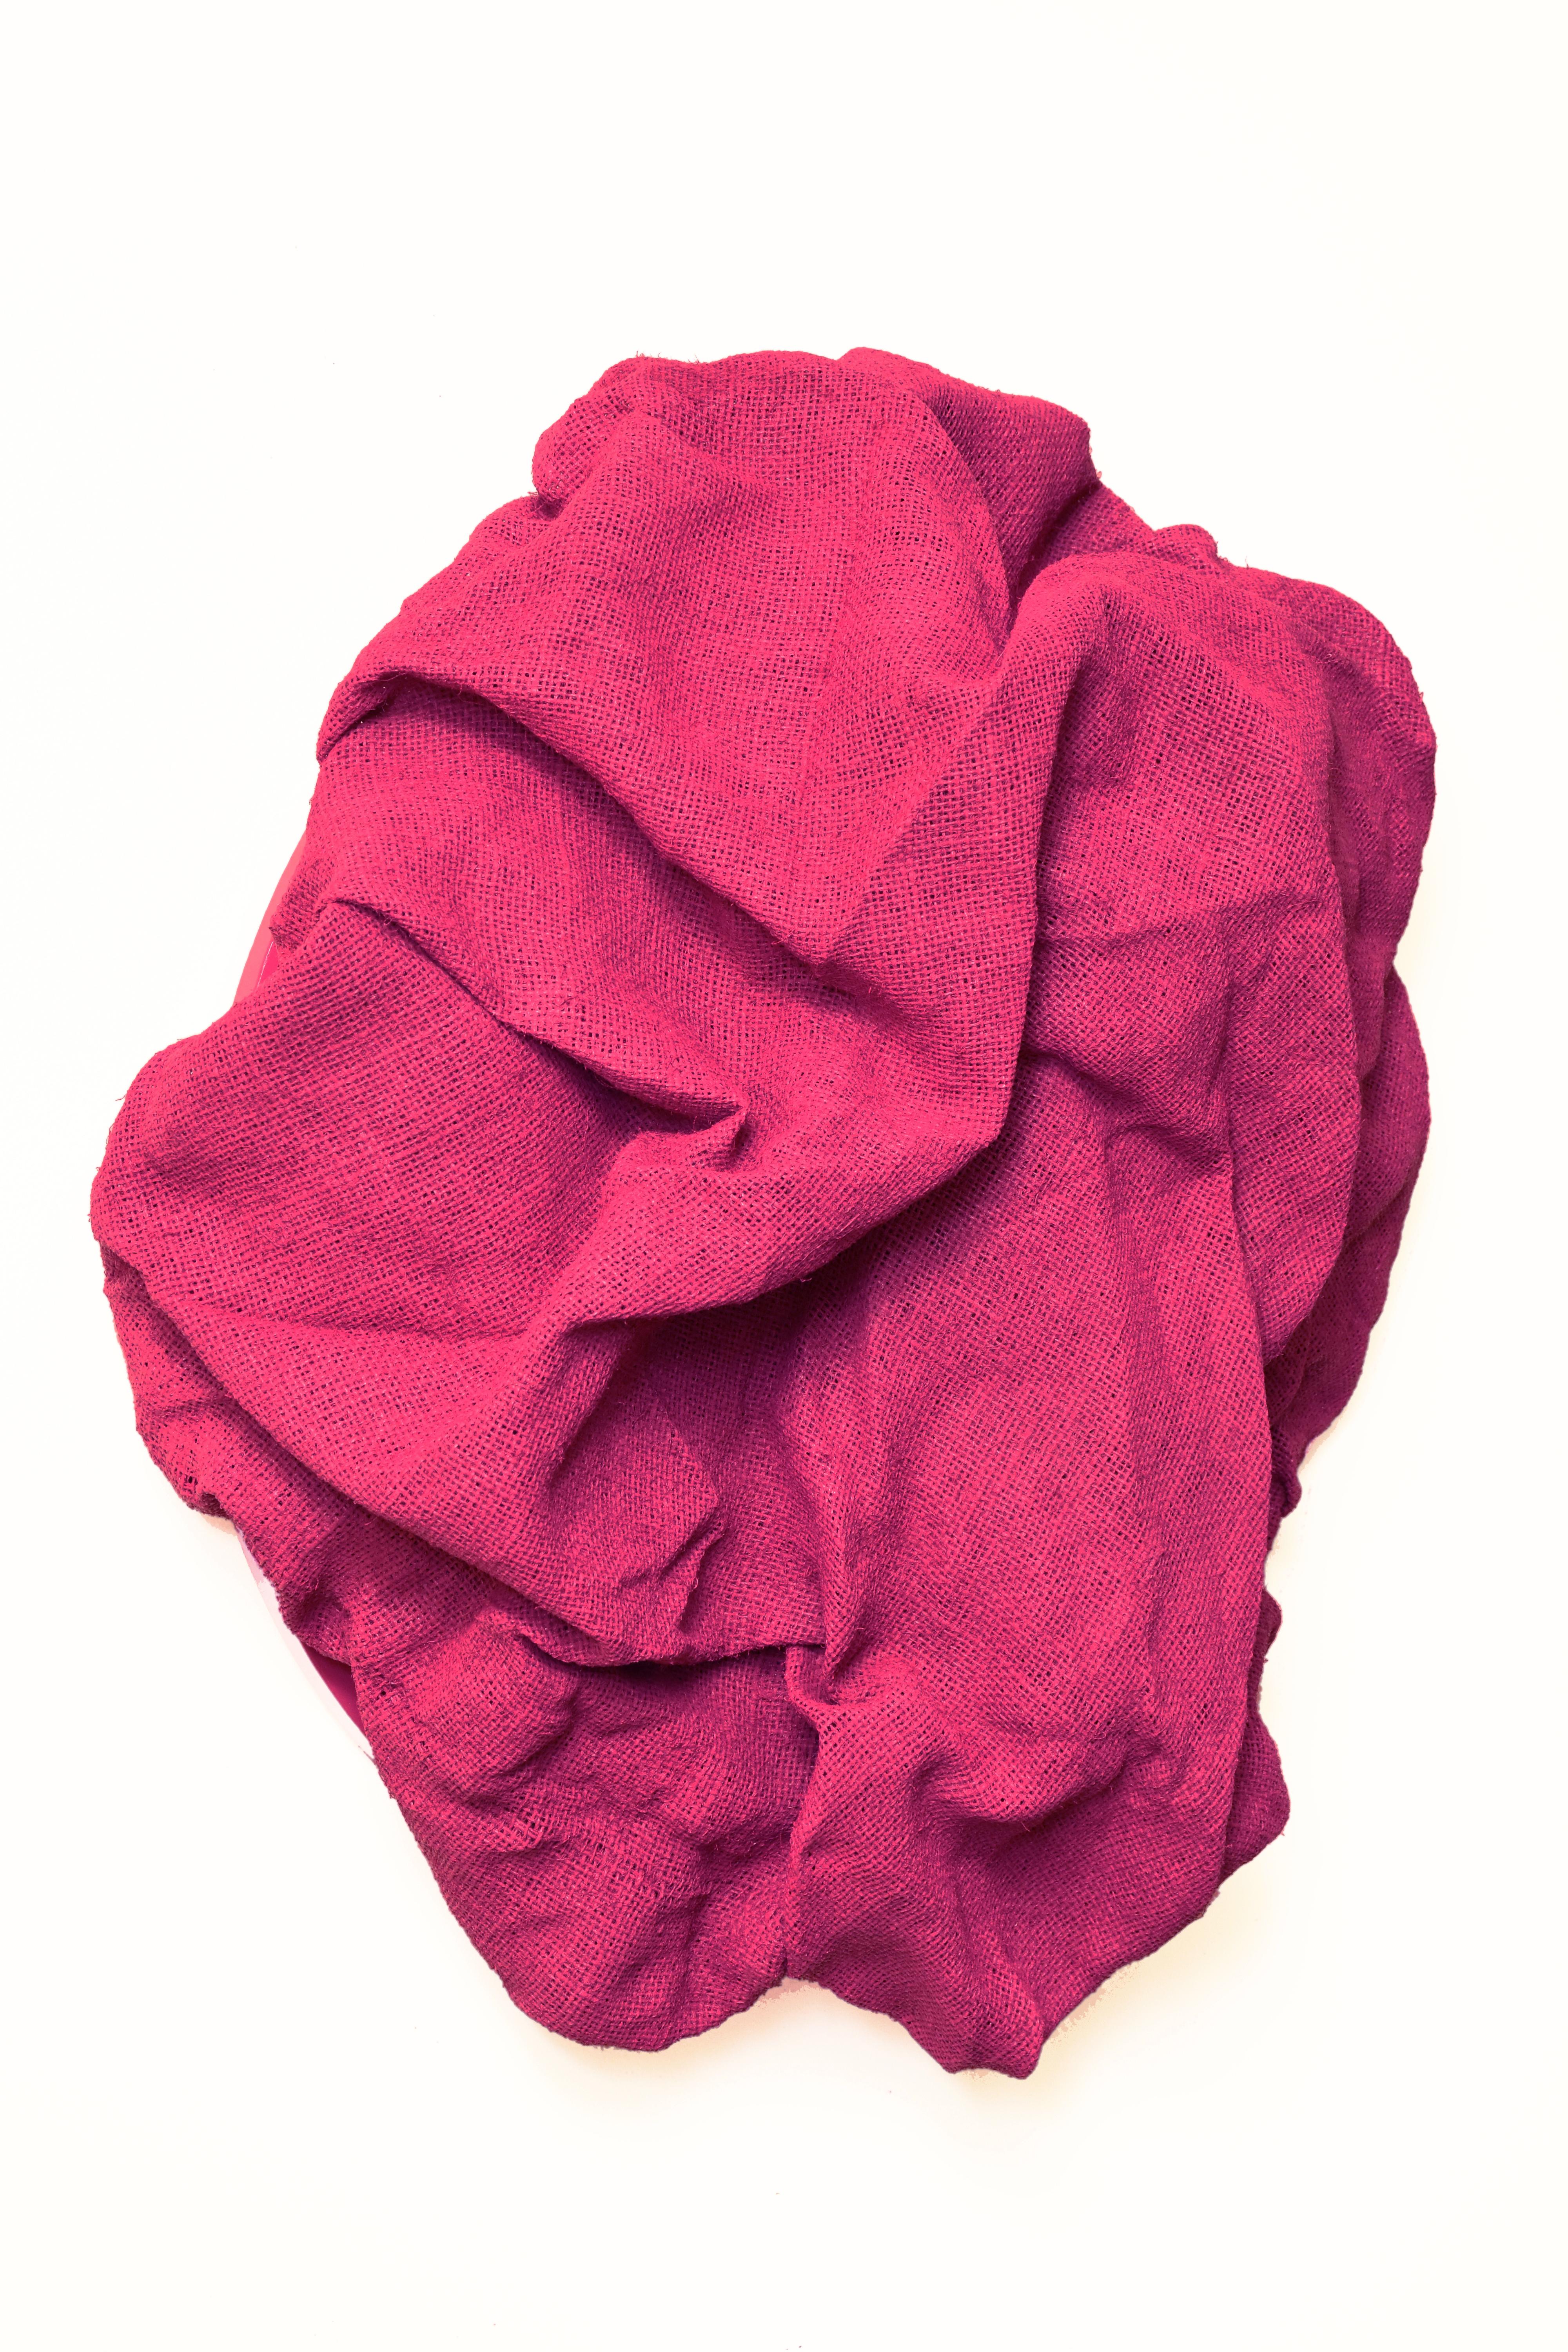 Sculpture murale «ambo Pink Folds » en tissu, monochrome, chaude, mcm en vente 1